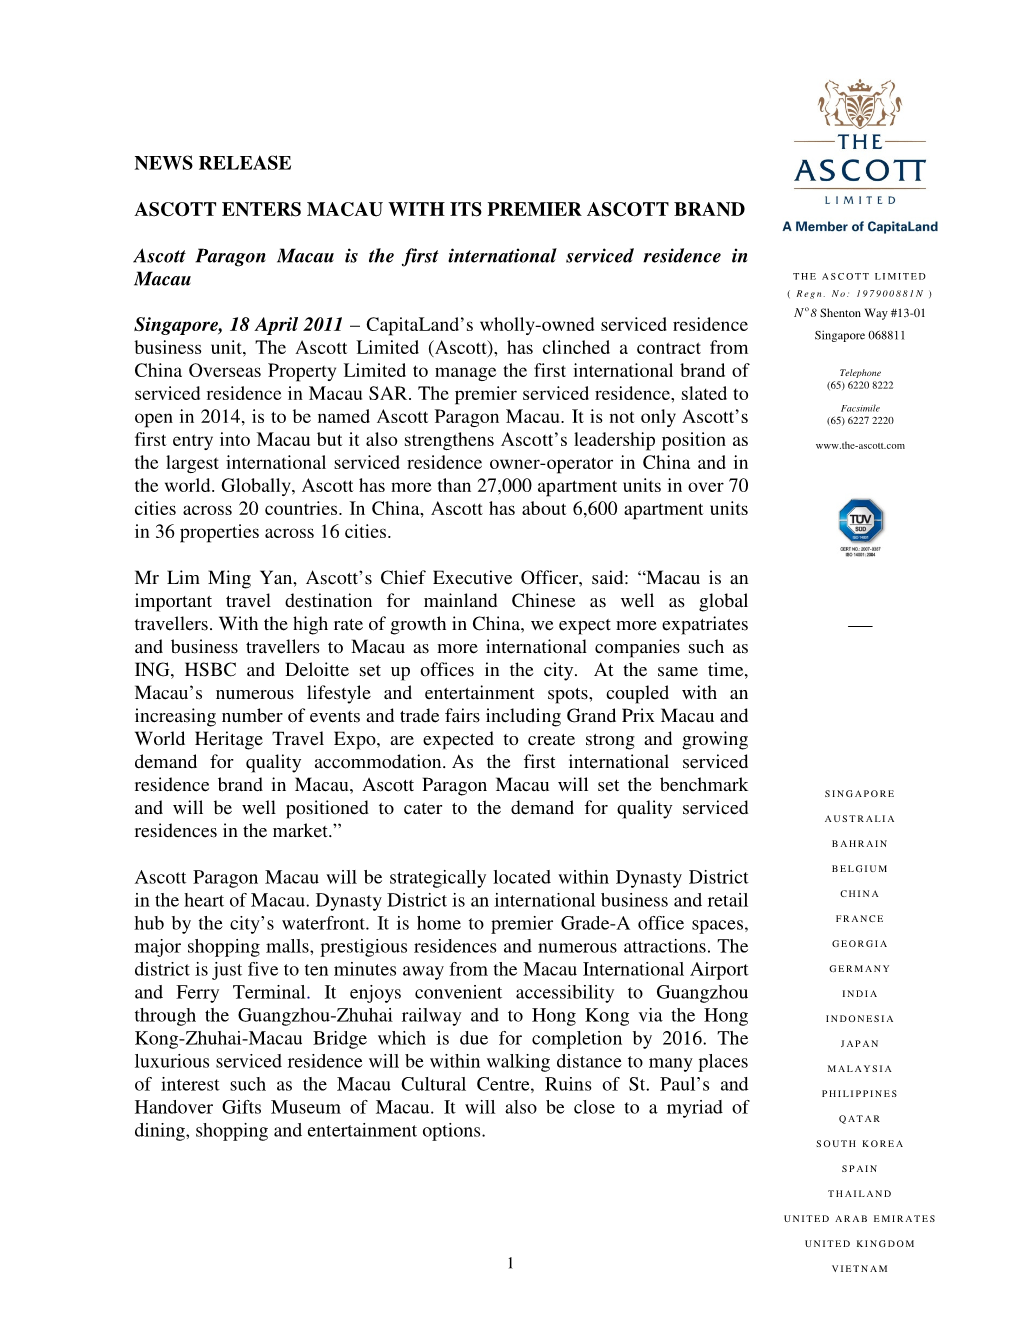 News Release Ascott Enters Macau with Its Premier